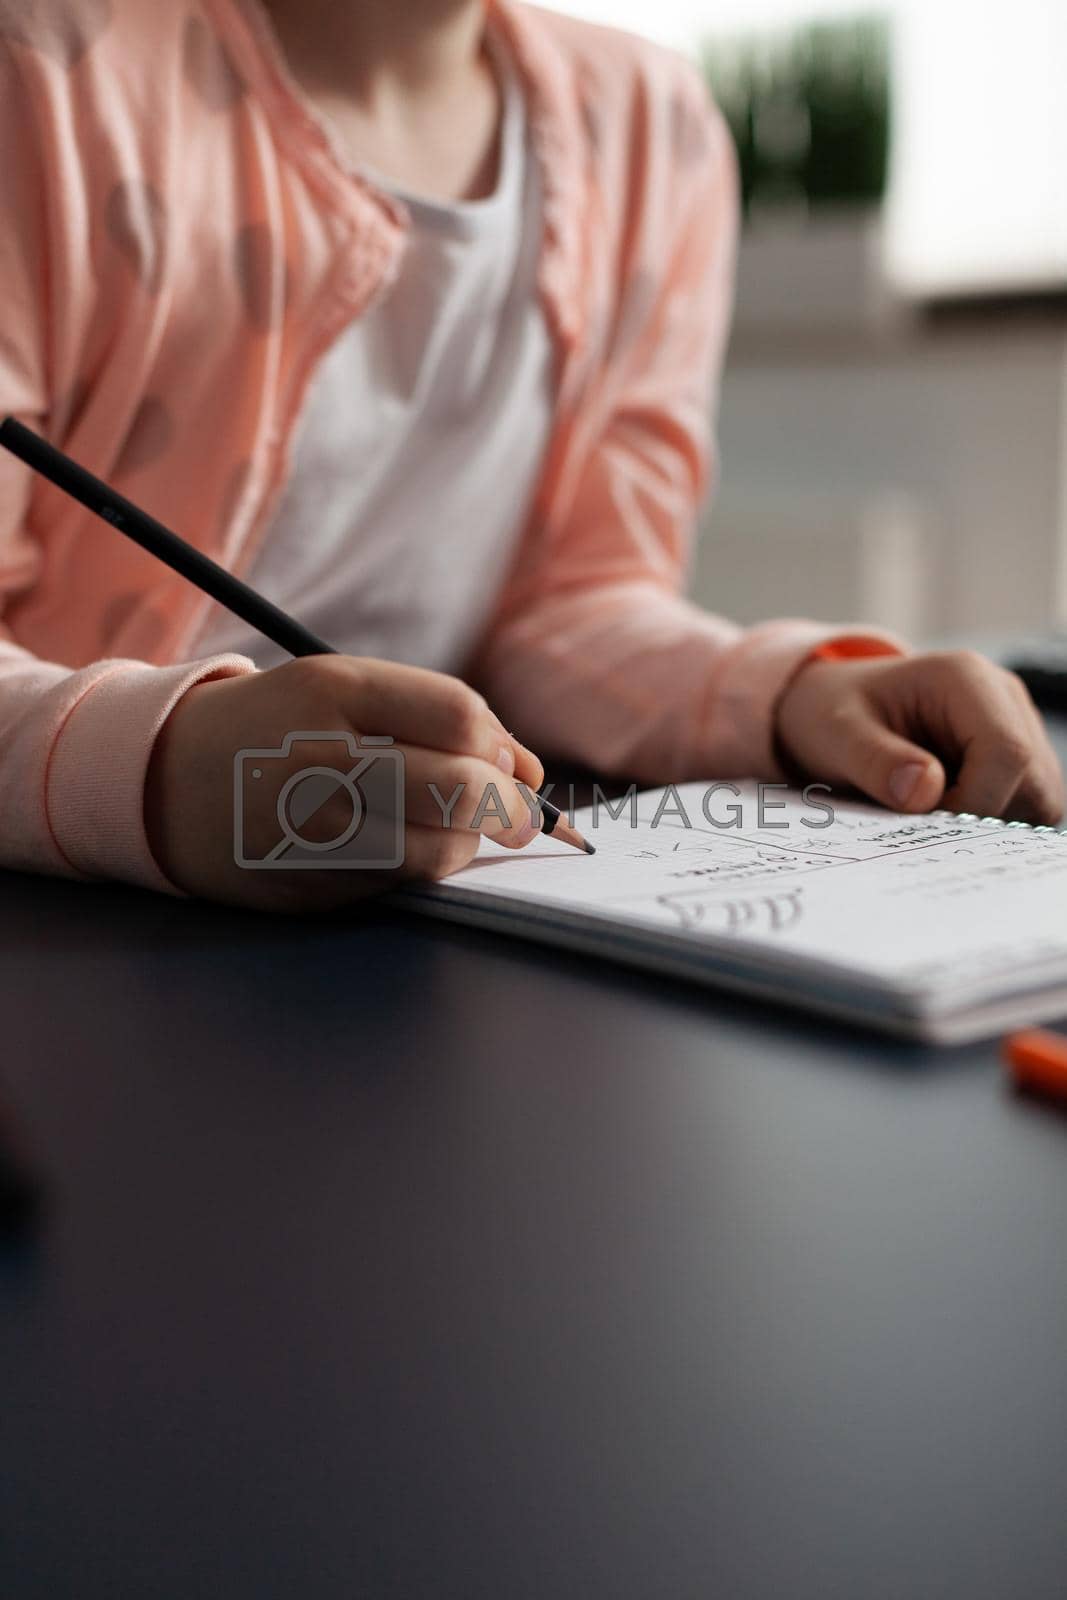 Royalty free image of Closeup of little schoolchild writing mathematics homework on notebook by DCStudio